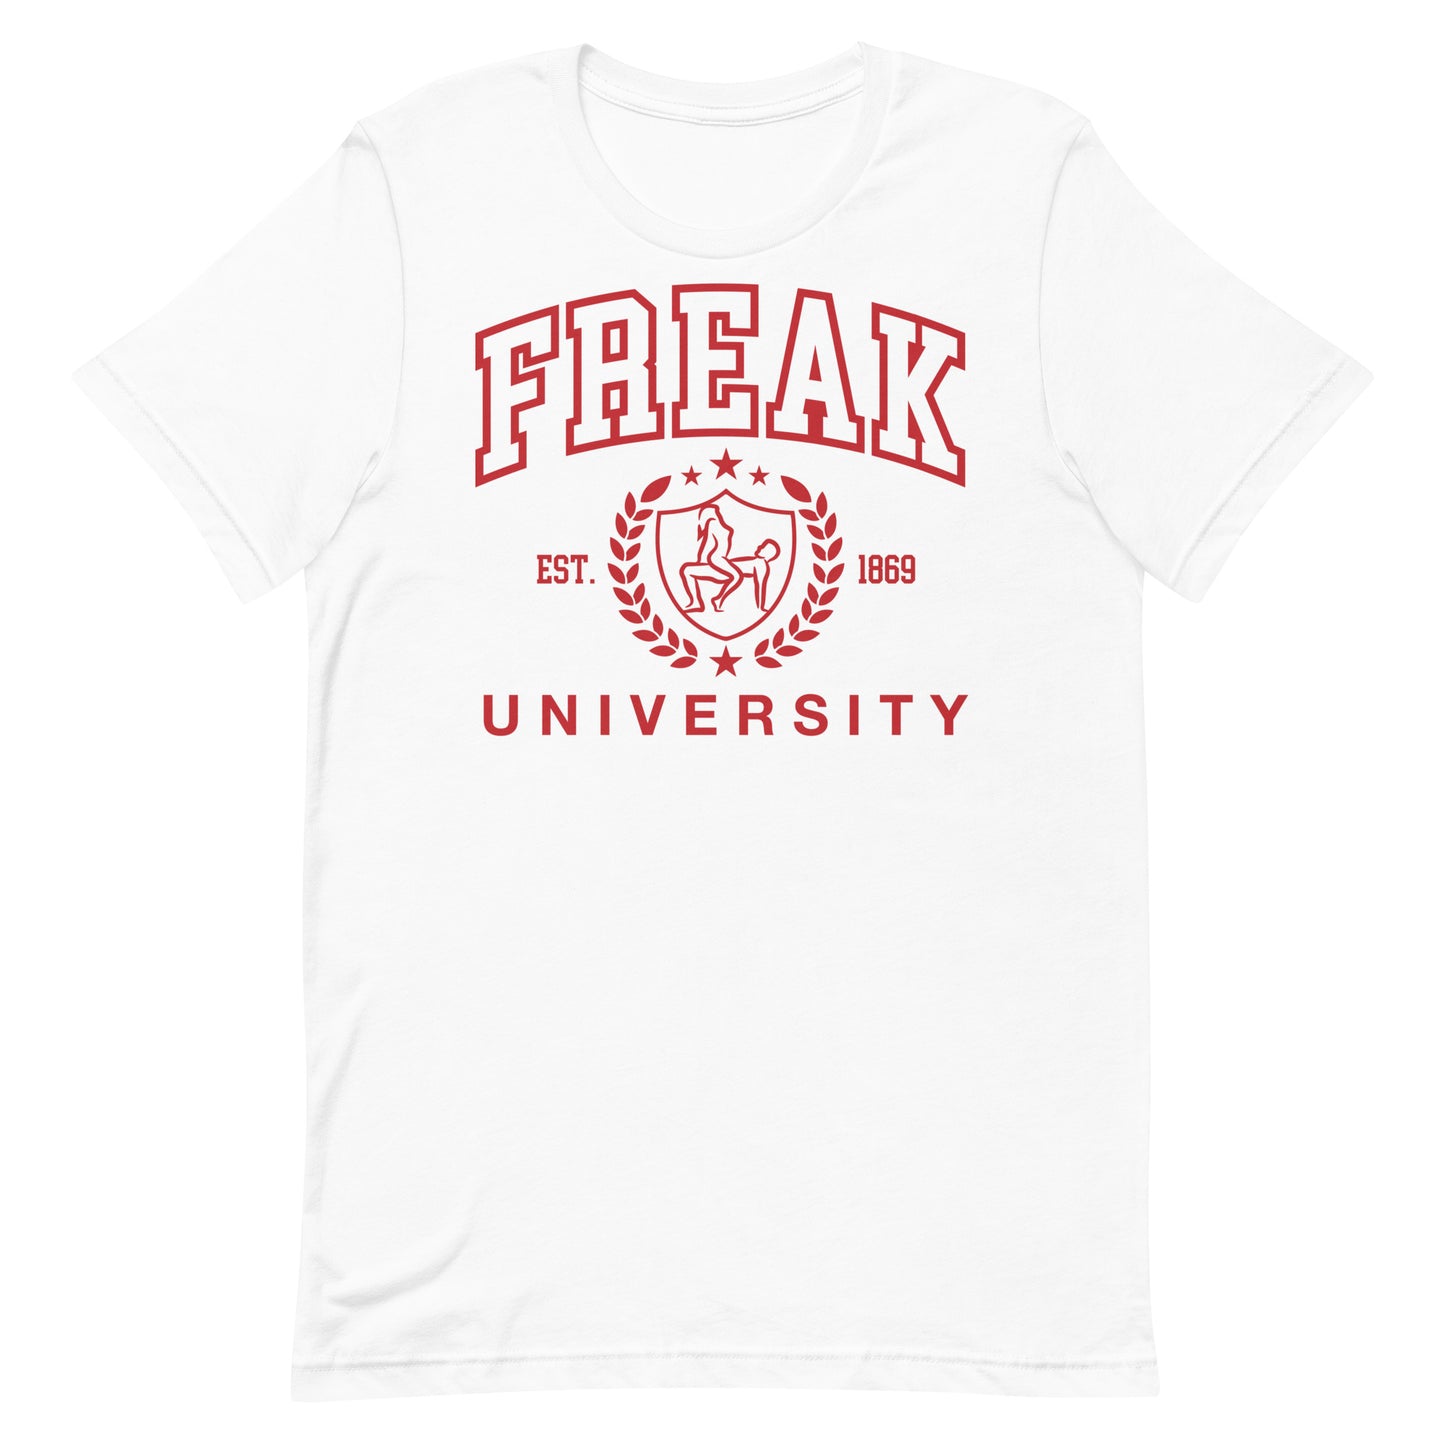 Freak University Unisex t-shirt